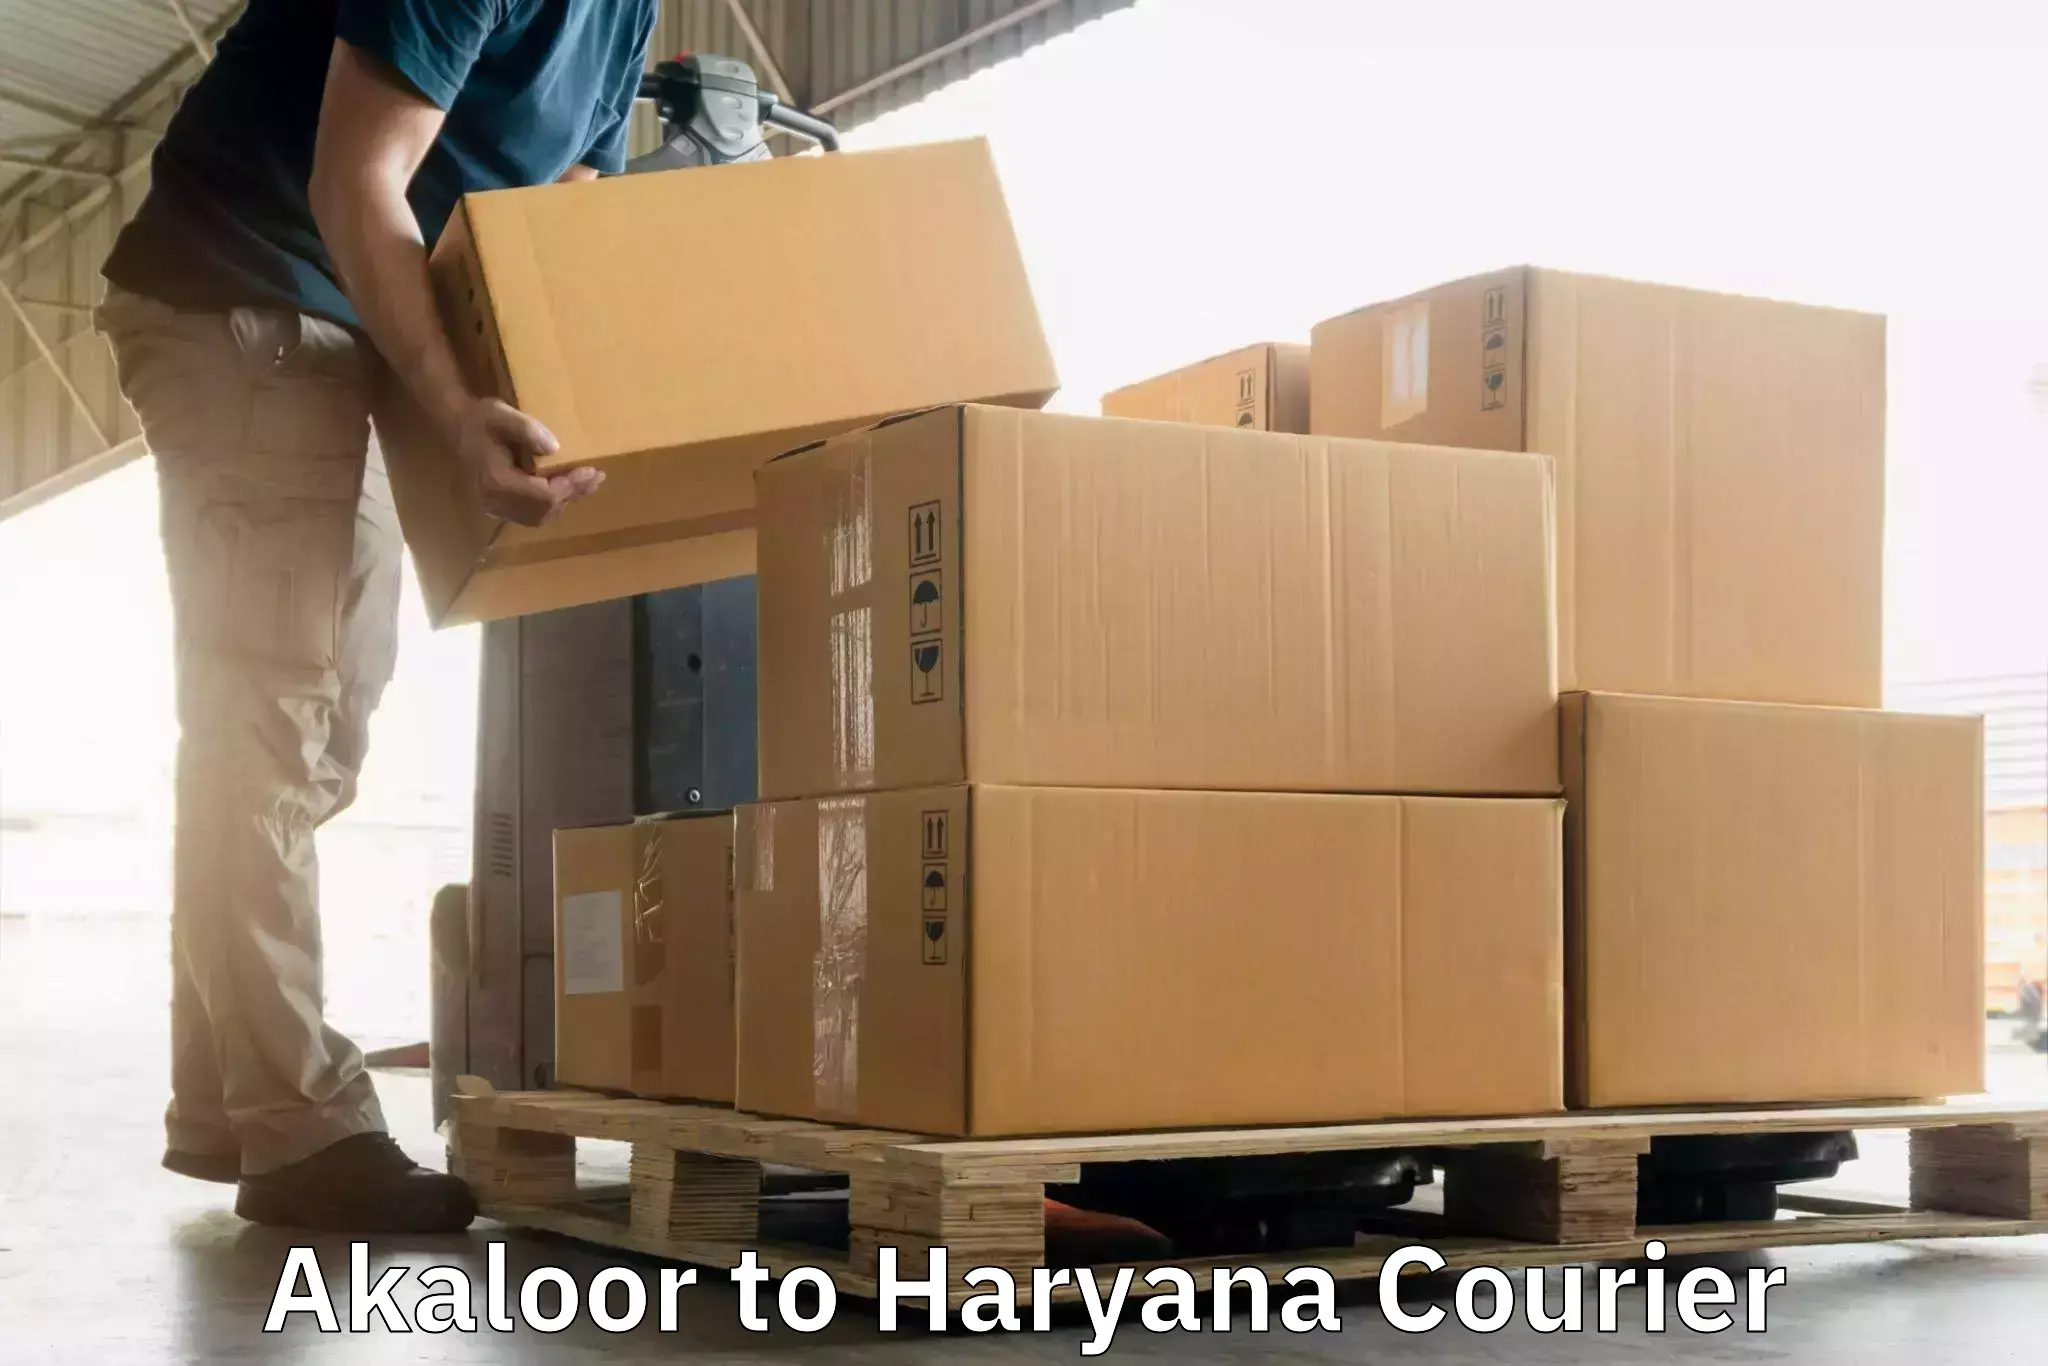 Seamless shipping experience Akaloor to Gurgaon